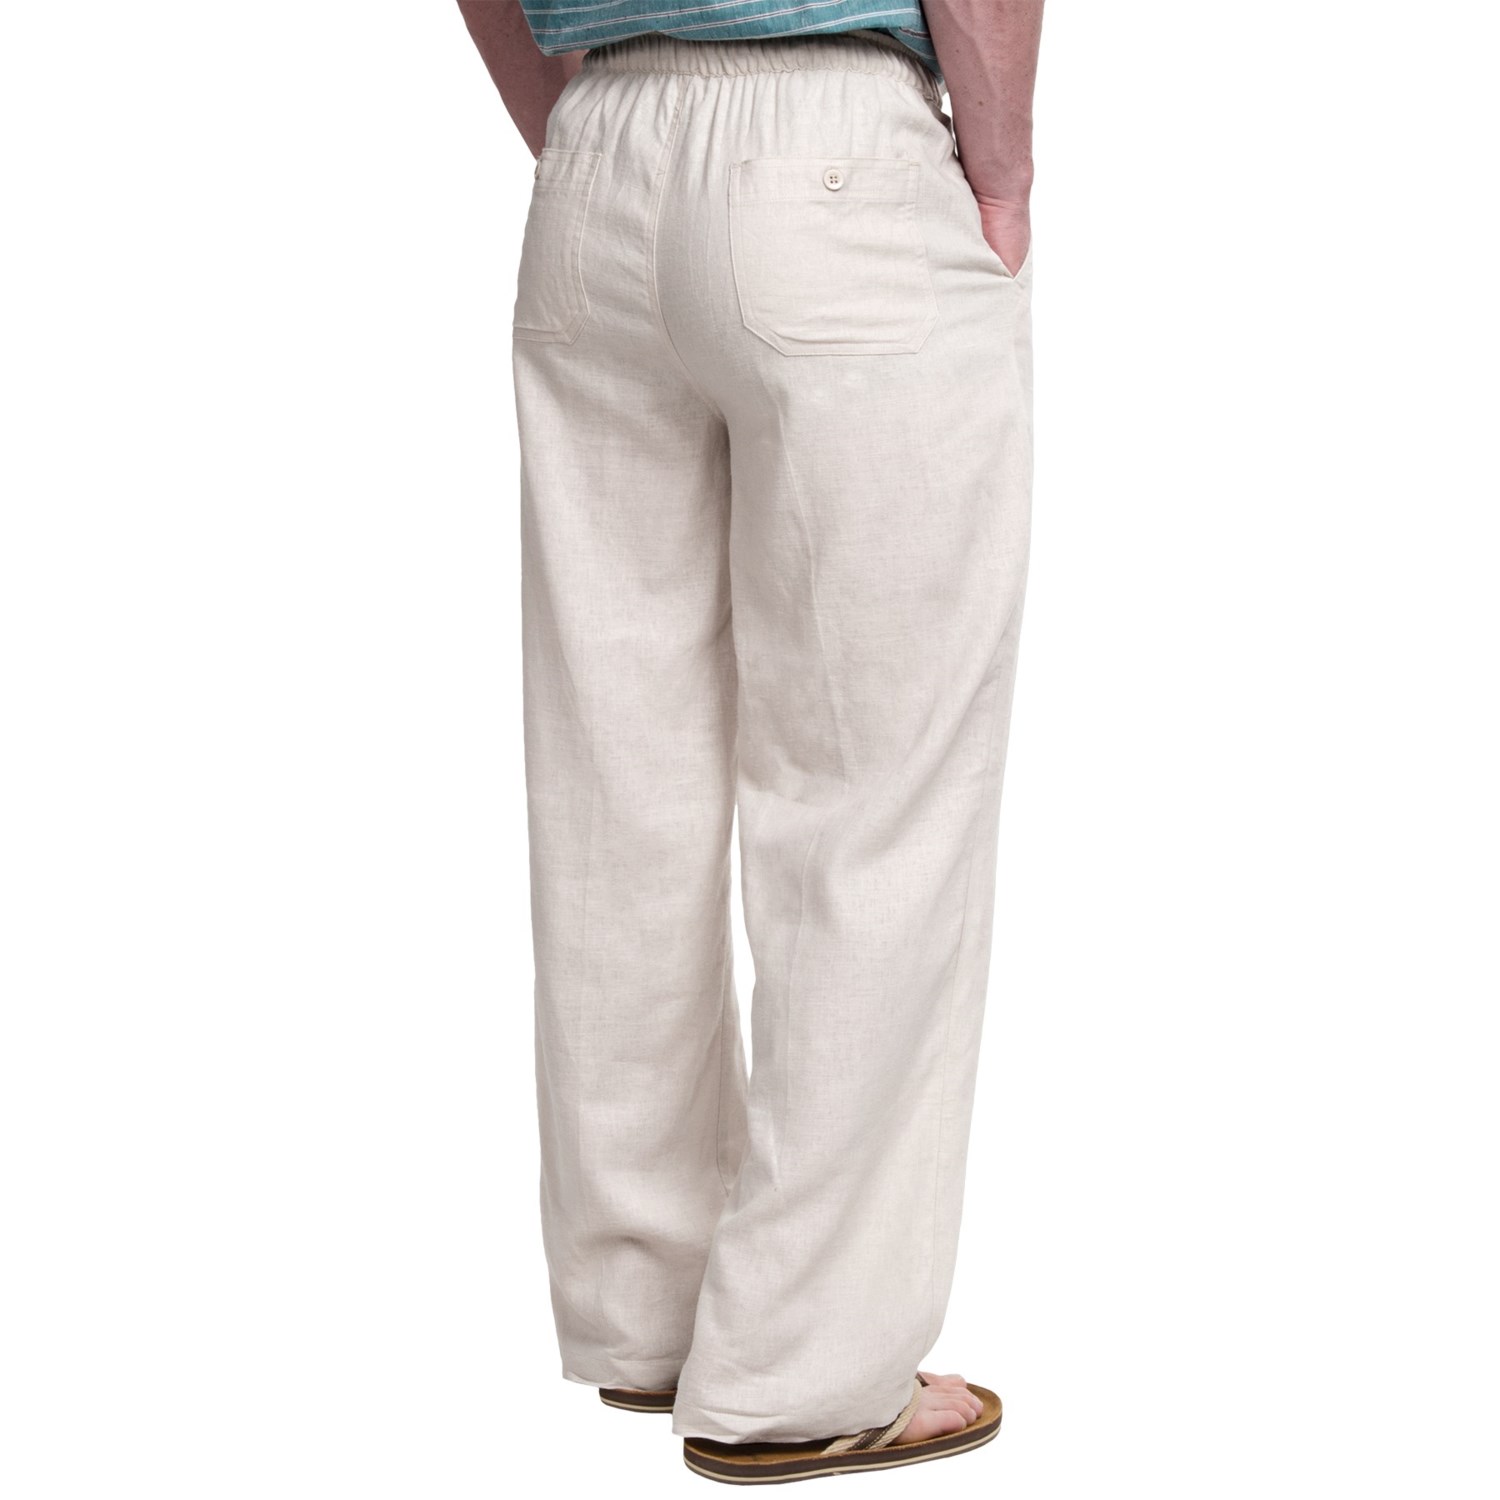 Visitor Linen Lounge Pants (For Men) - Save 79%